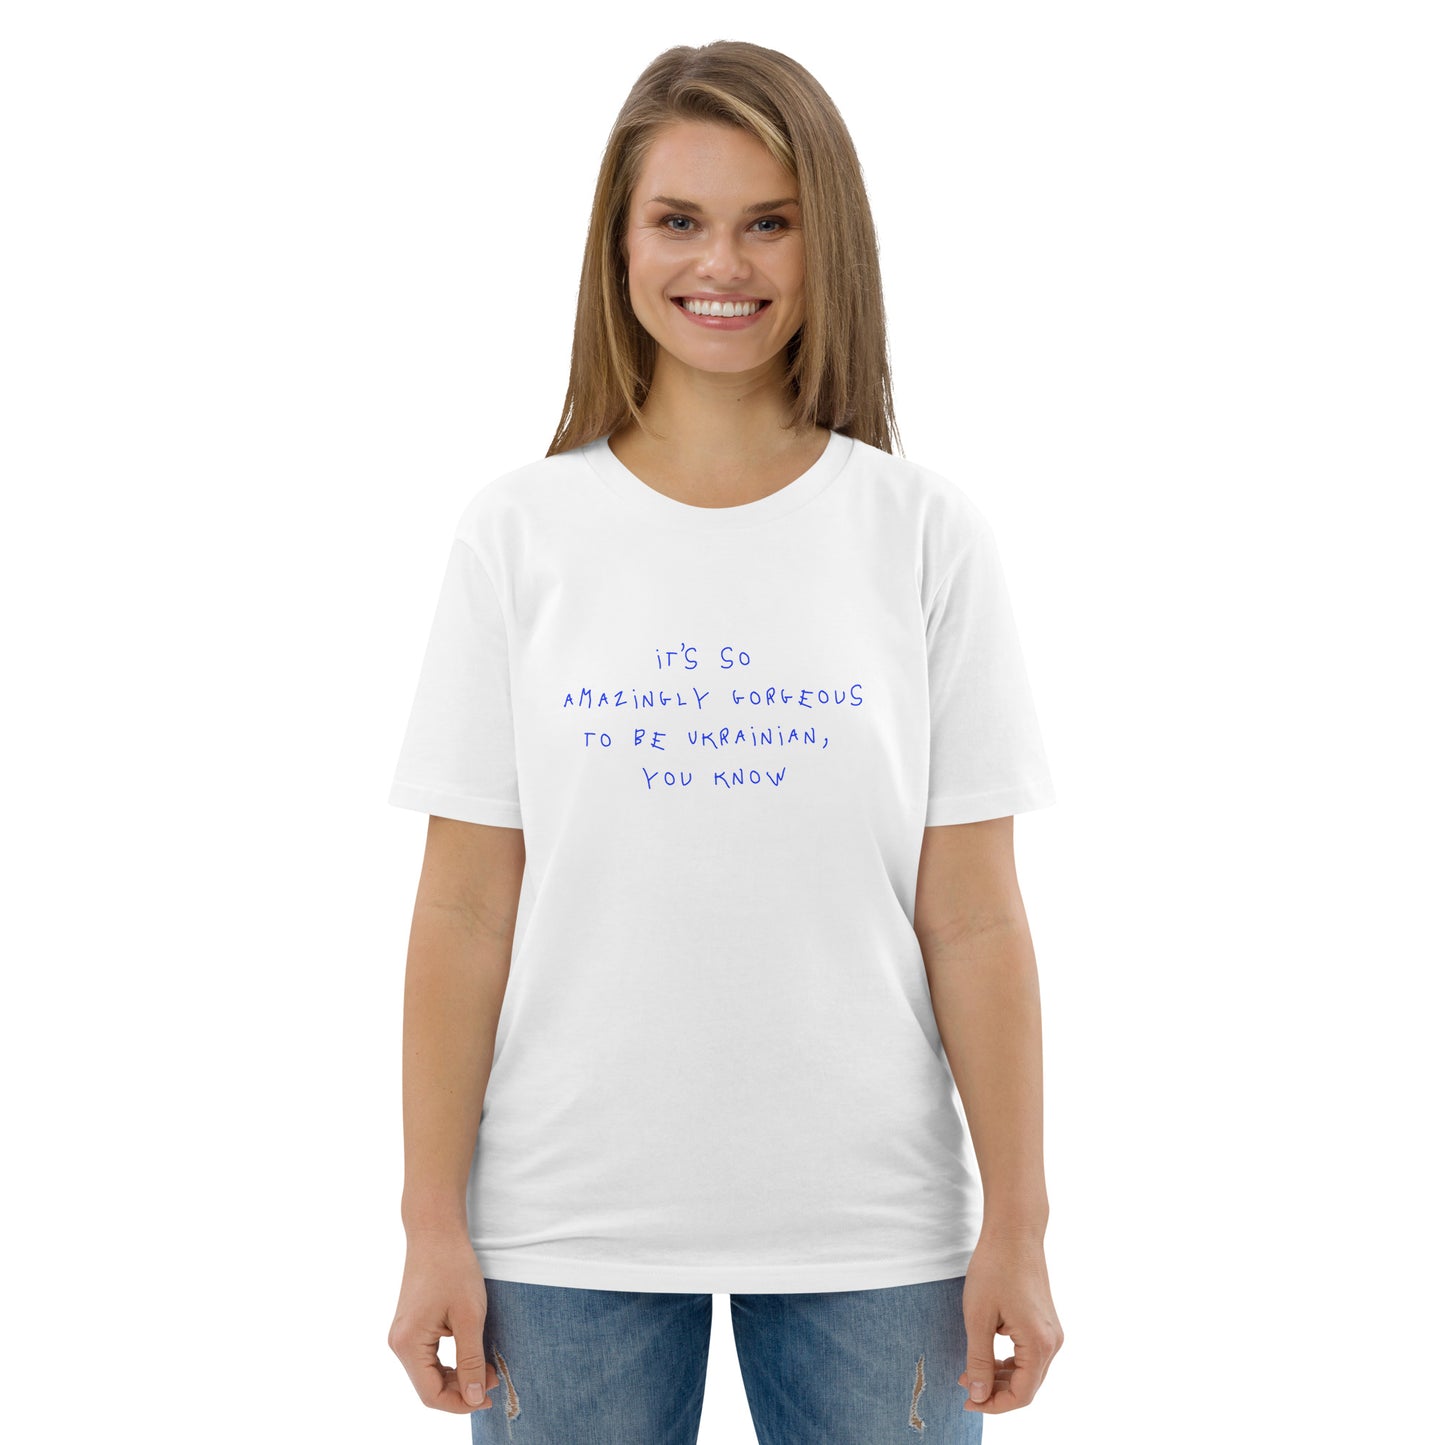 Amazingly gorgeous unisex printed organic cotton t-shirt in white